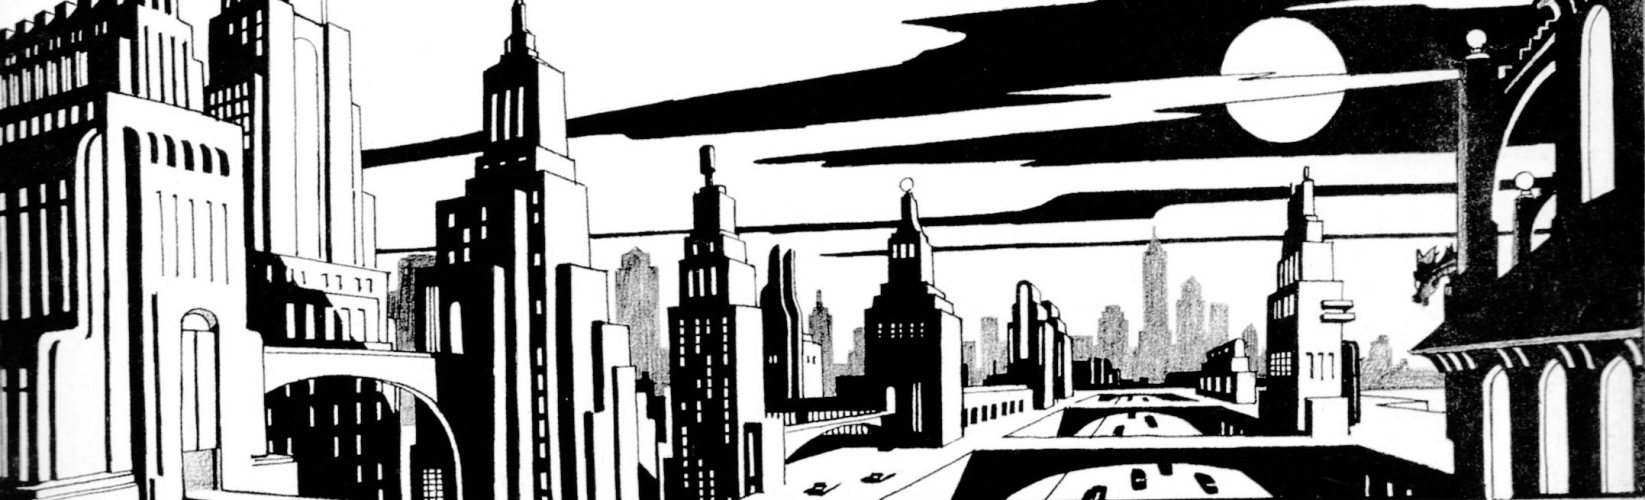 BATMAN: ANIMATED — Gotham City by Richie Chavez (2)